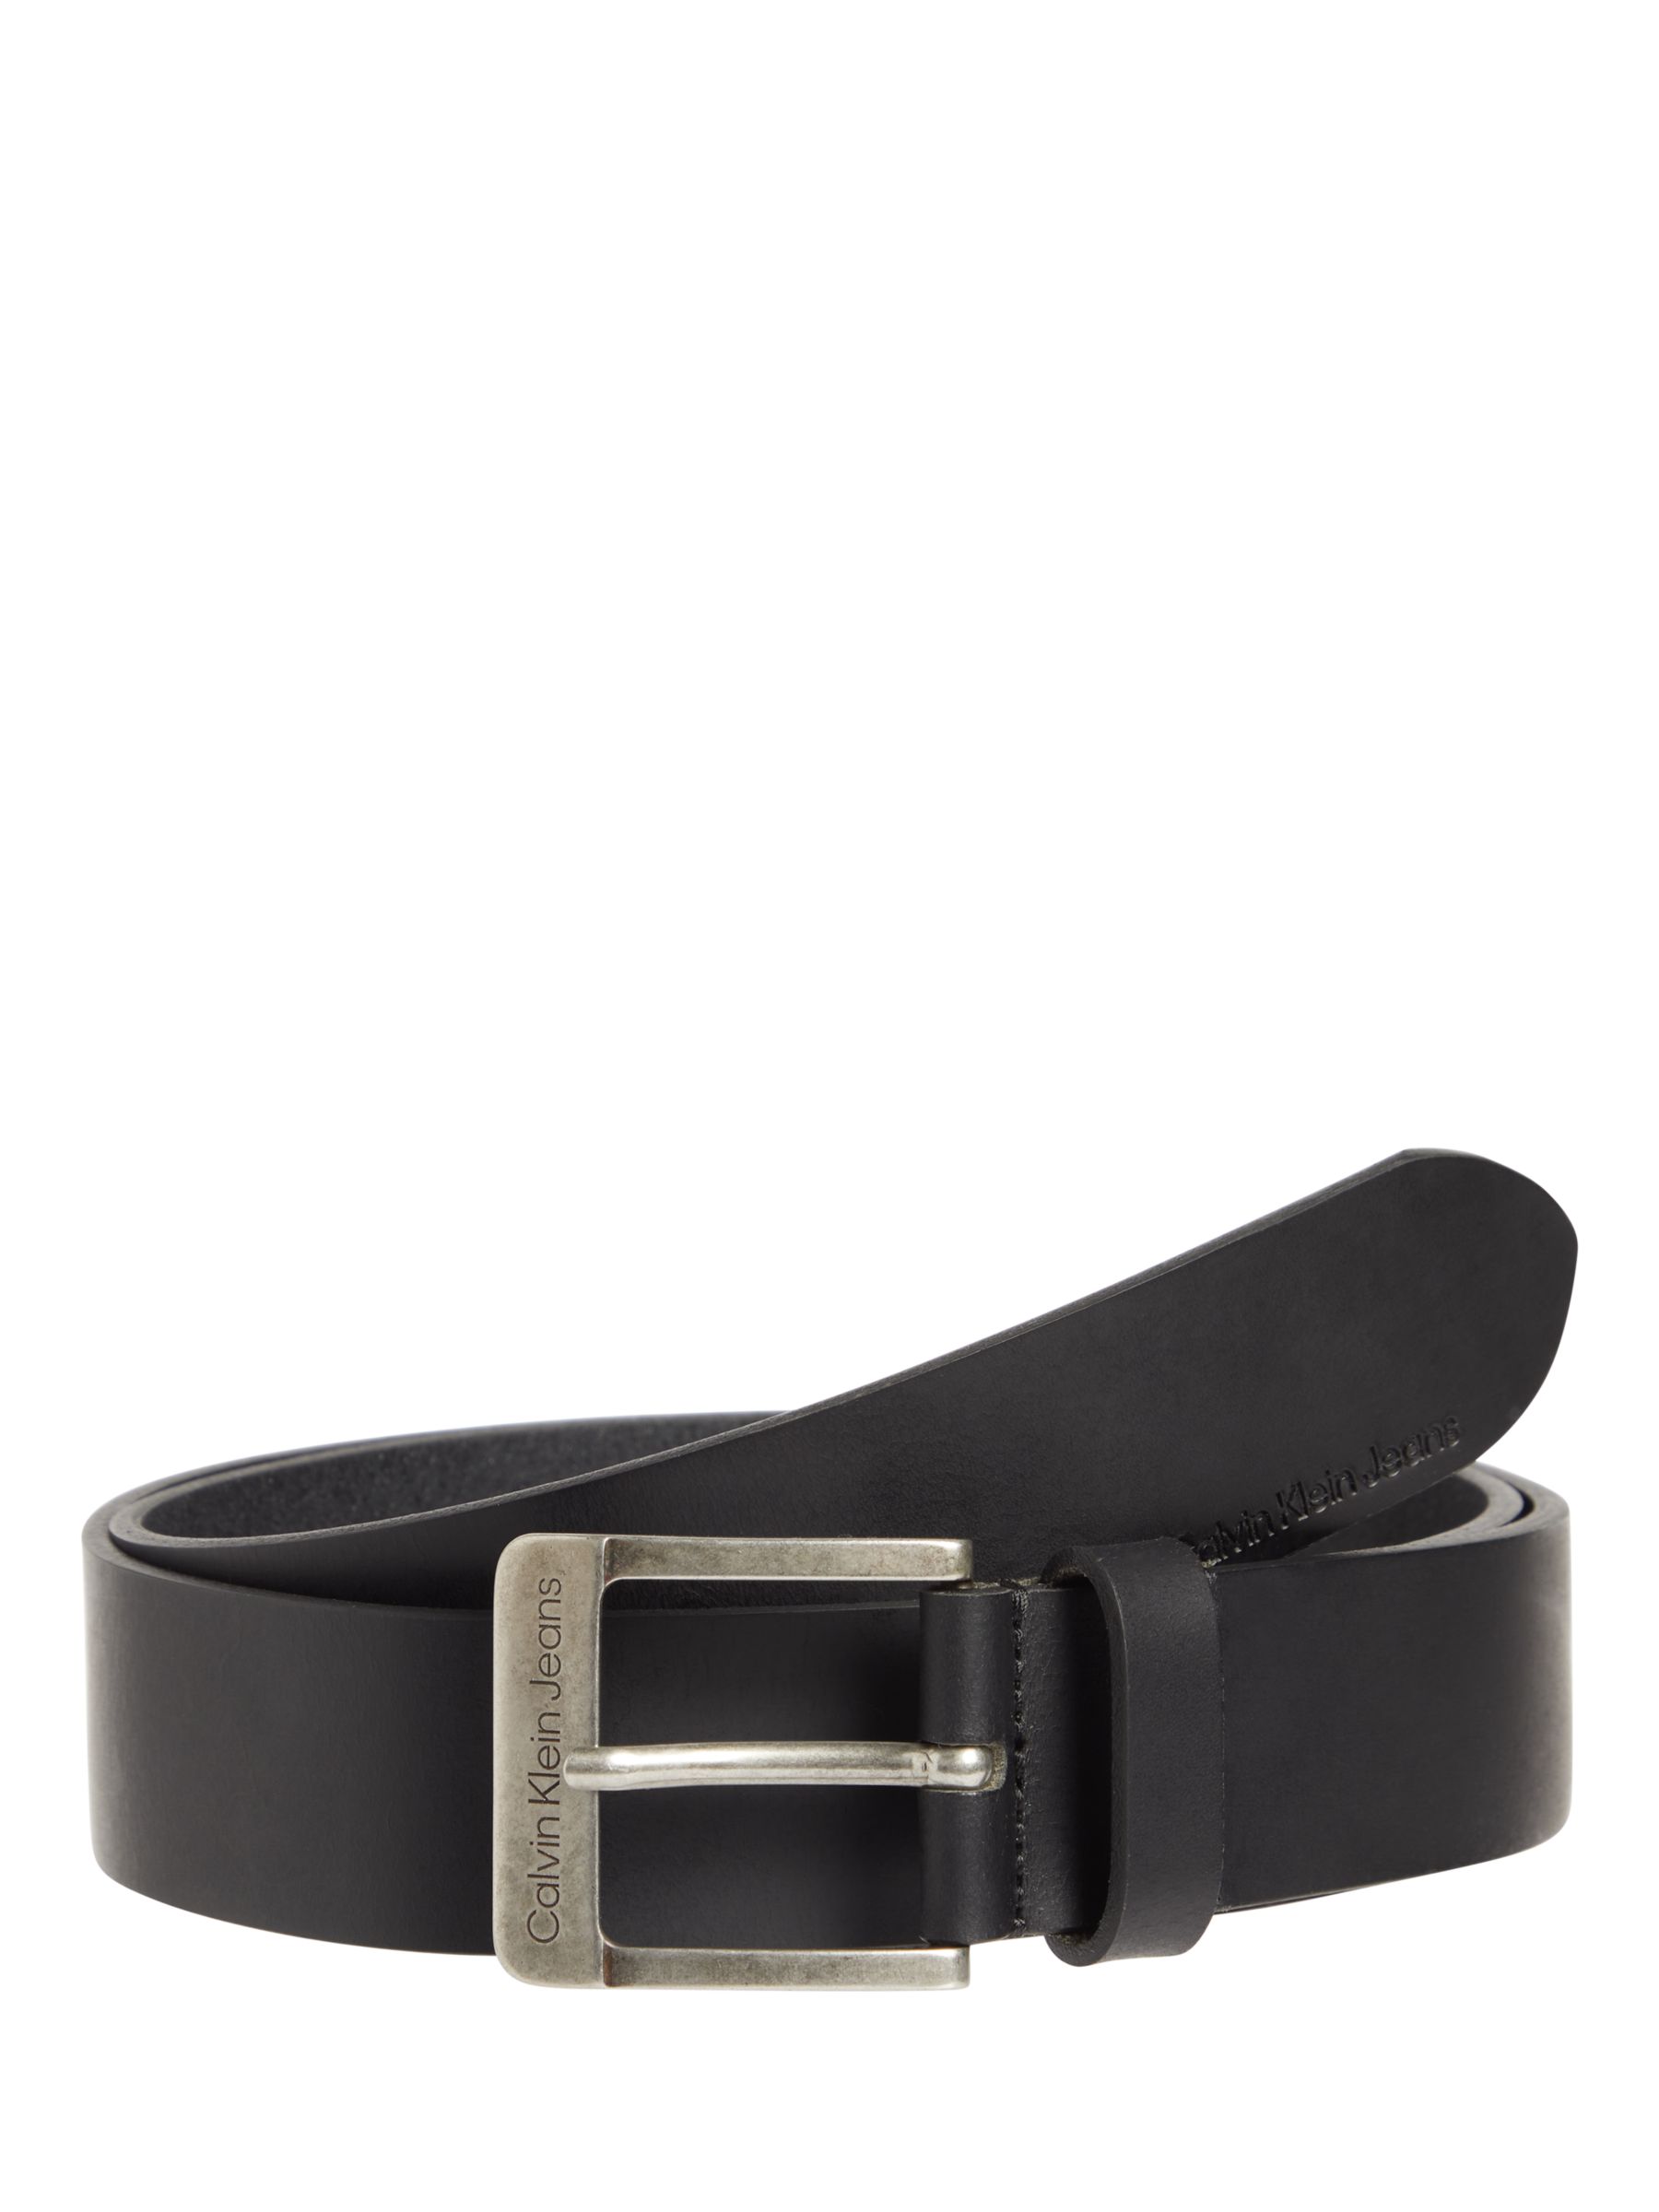 Calvin Klein Leather Belt, Black at John Lewis & Partners